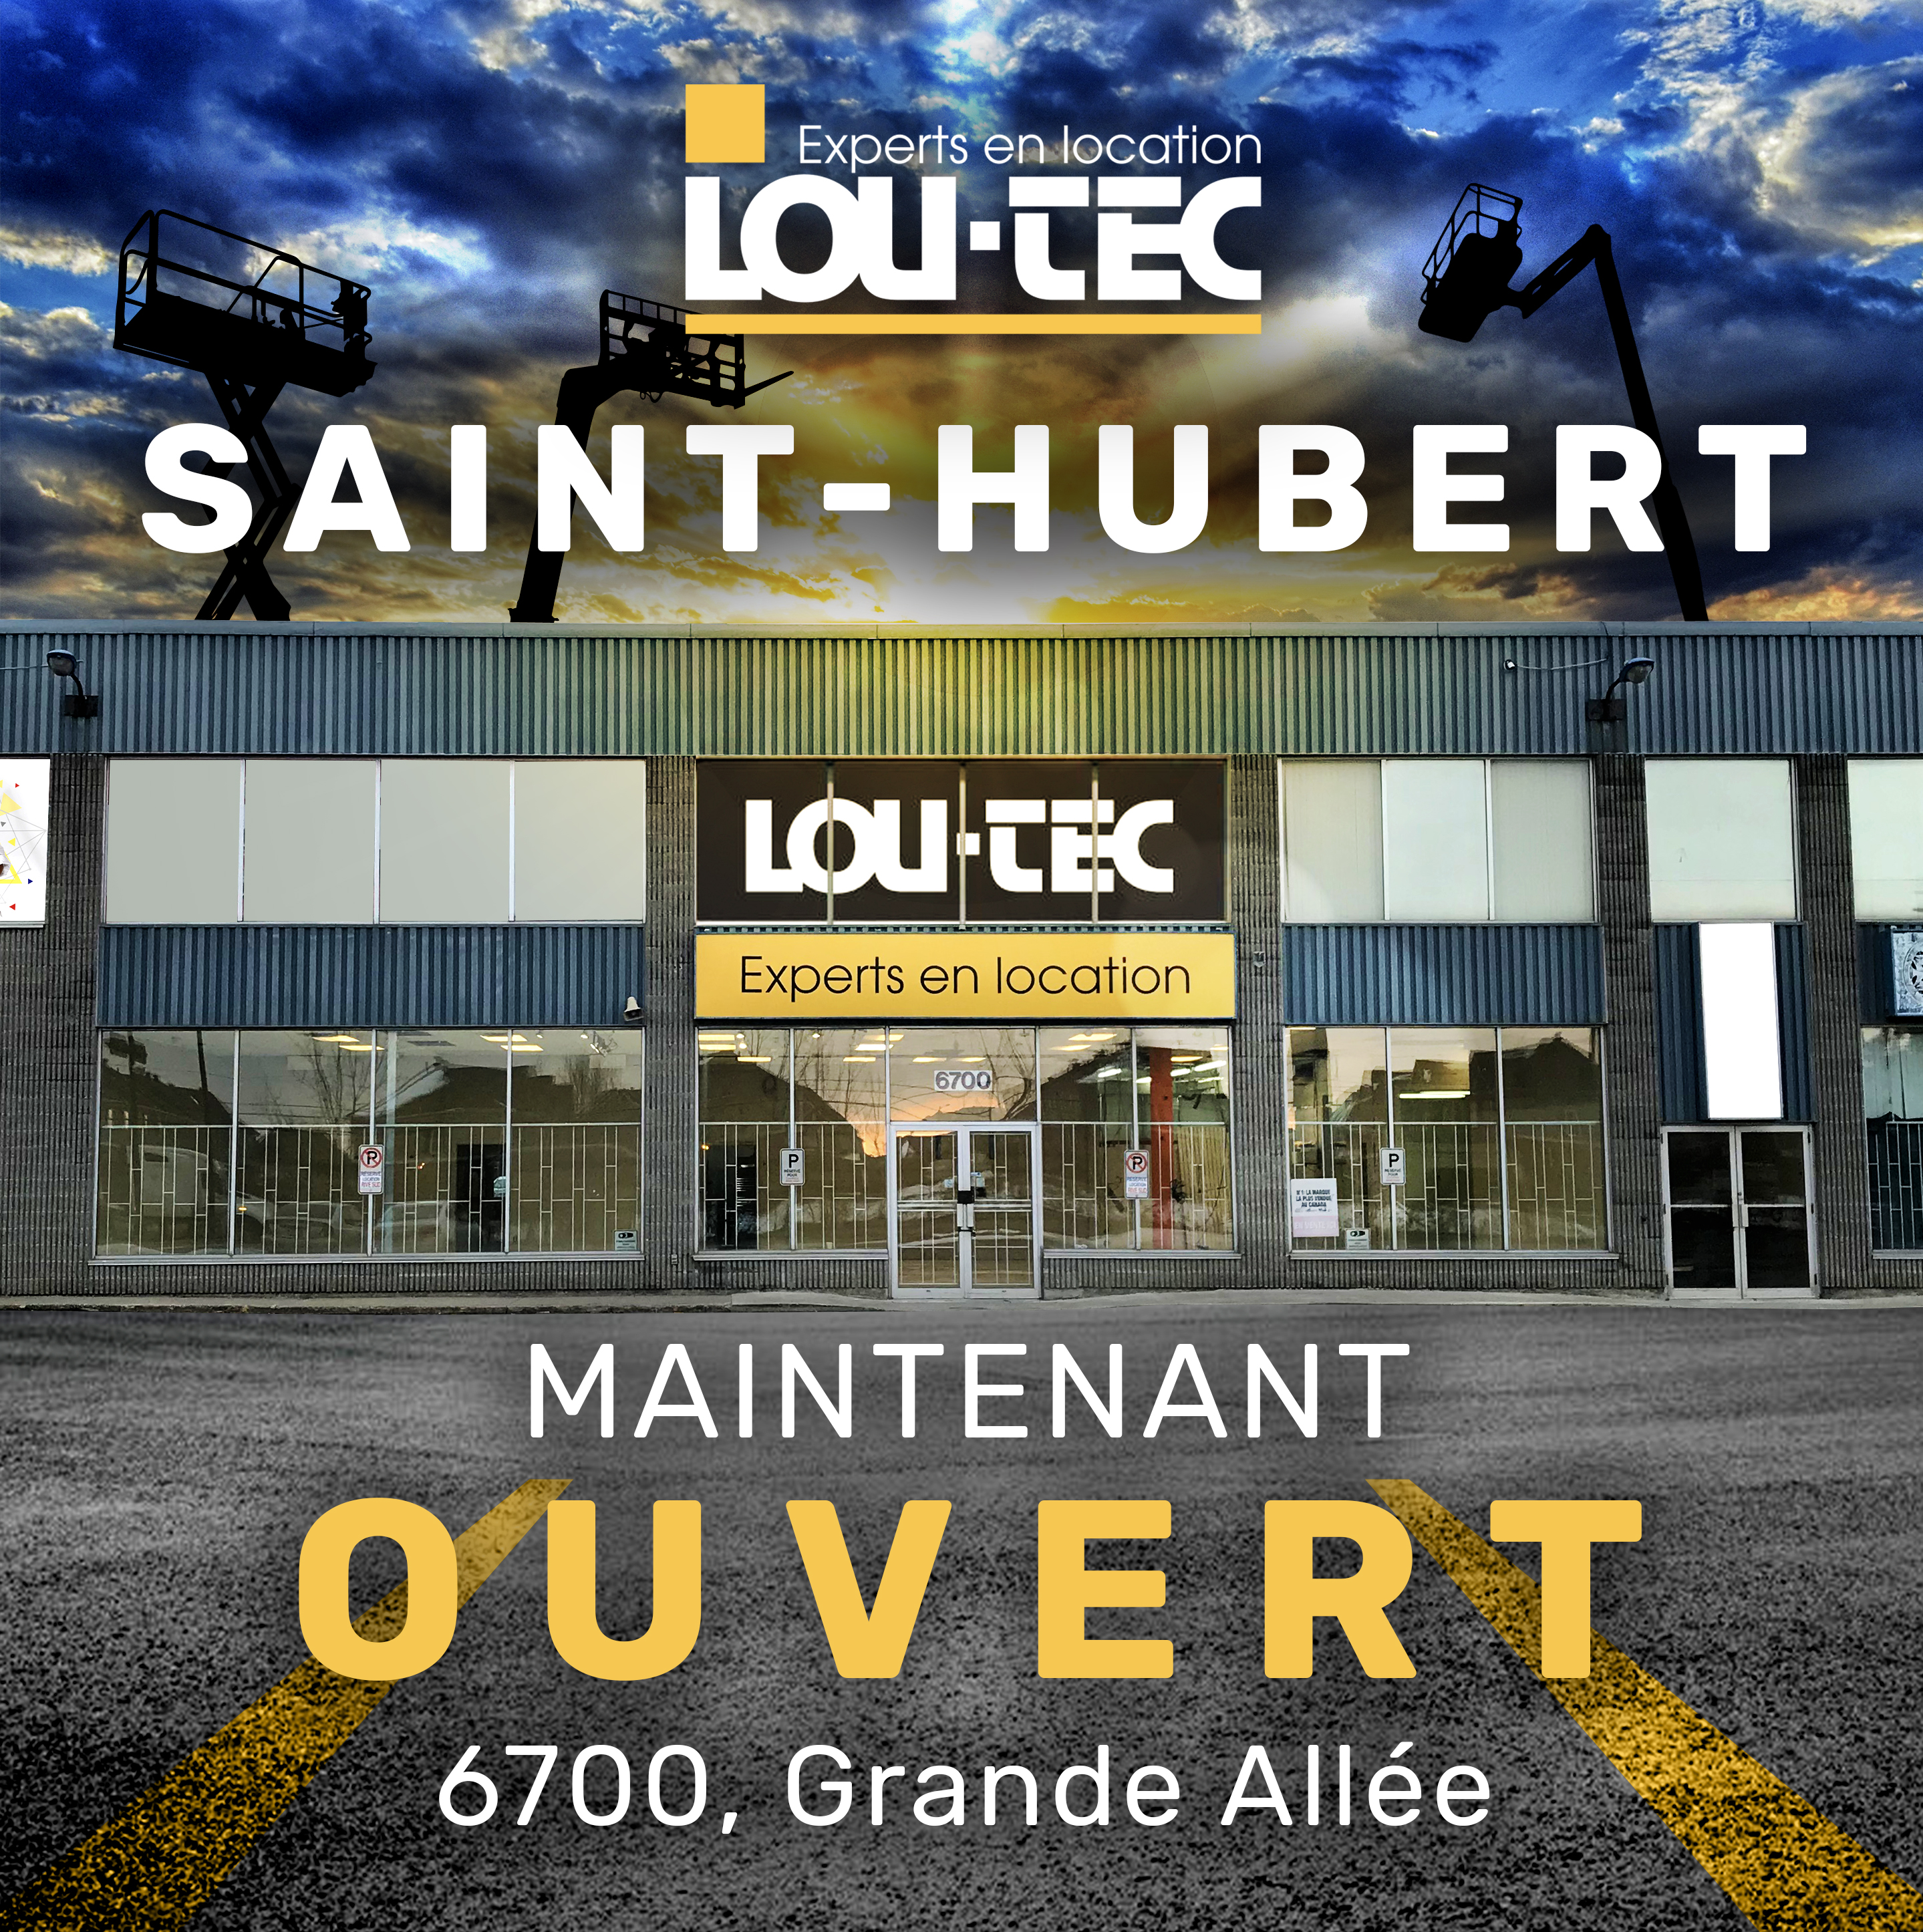 Lou-Tec Saint-Hubert
6700 boulevard Grande allée, St-Hubert
450-656-3265